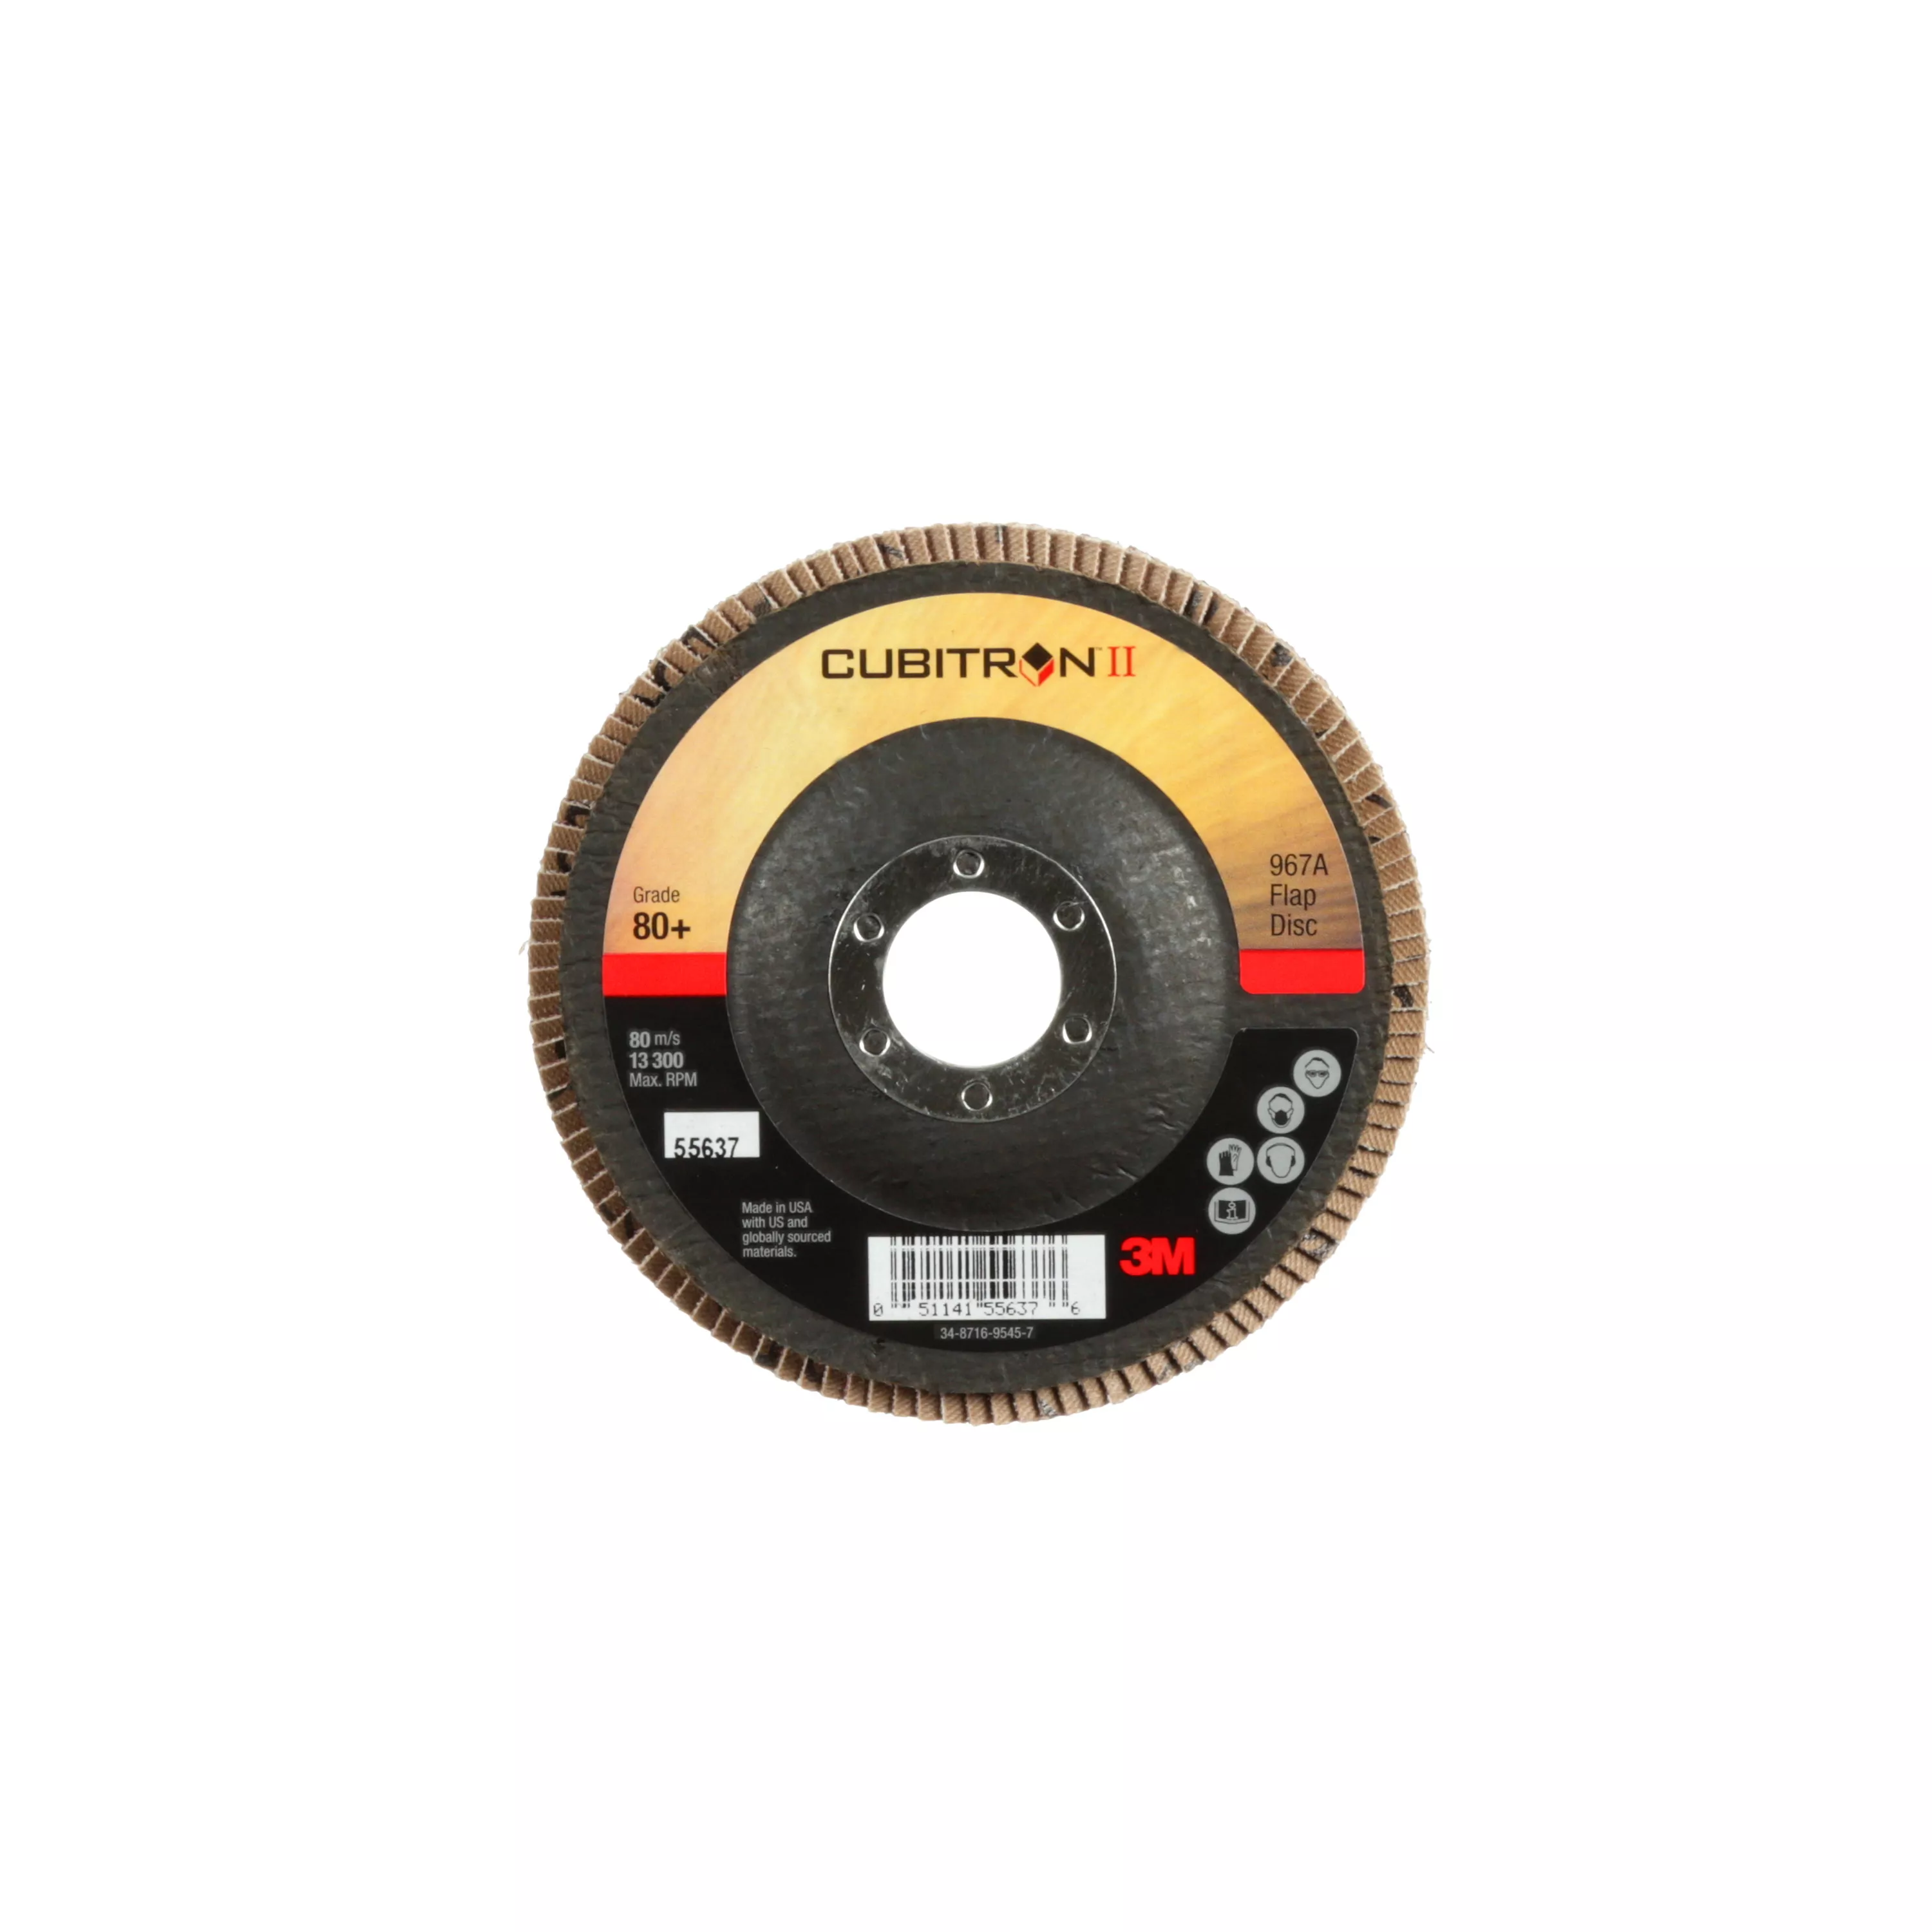 SKU 7010363303 | 3M™ Cubitron™ II Flap Disc 967A